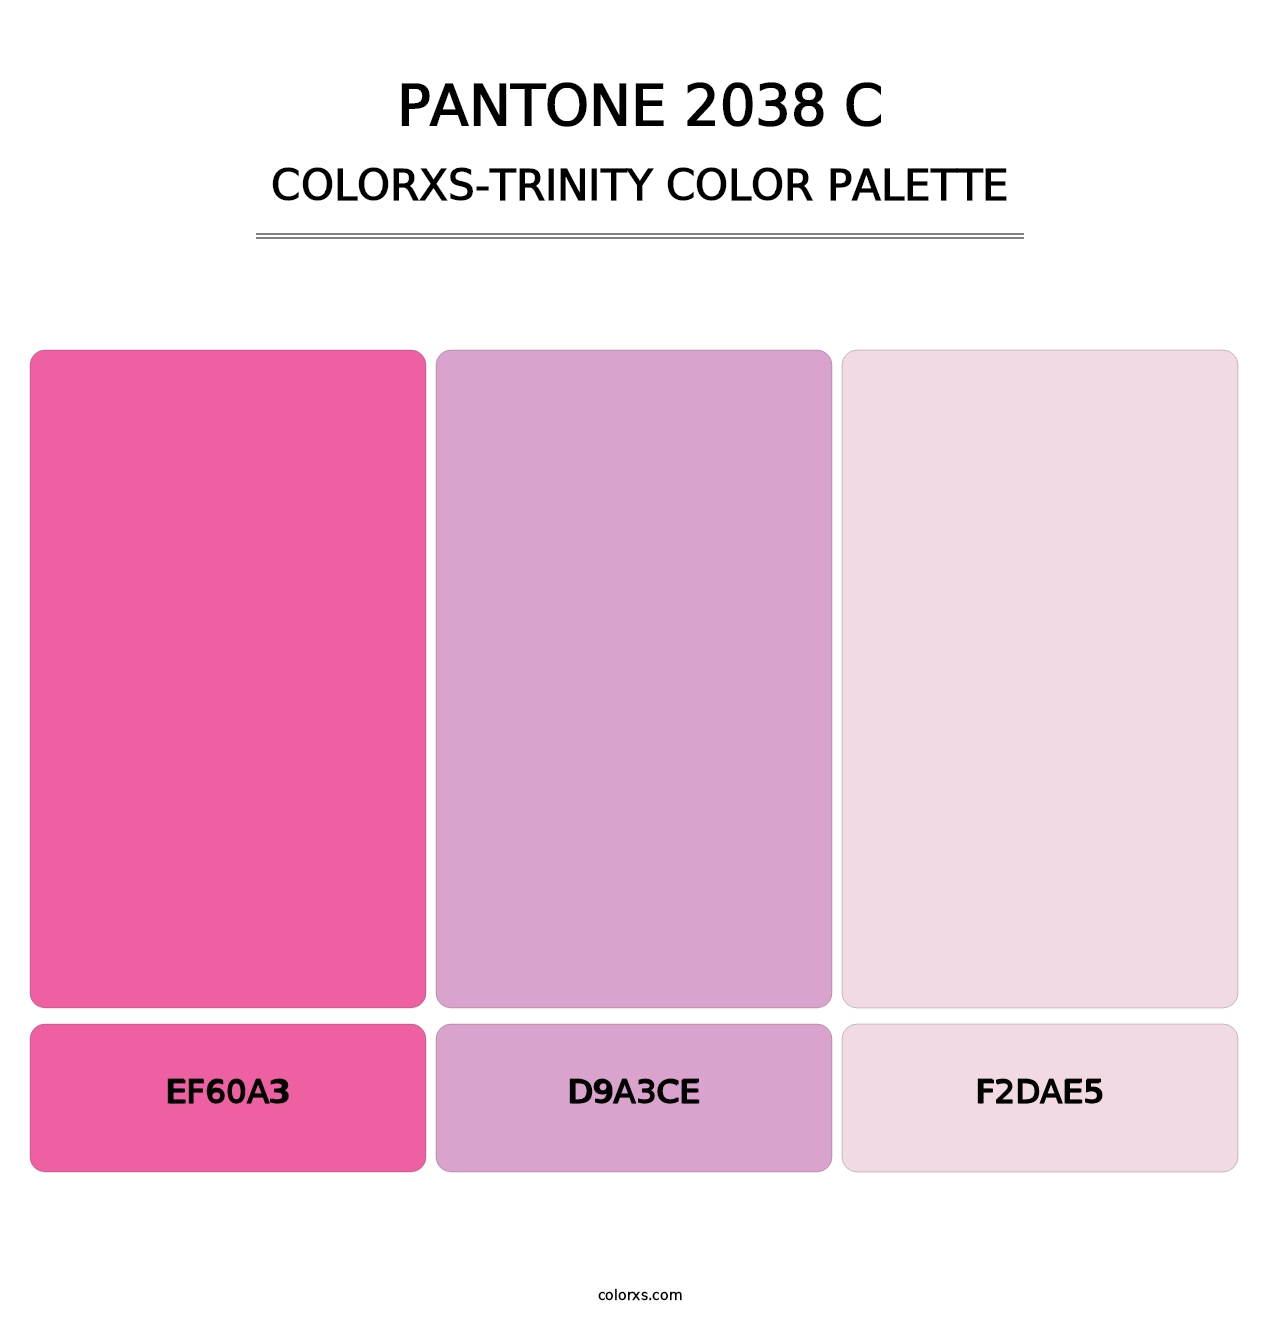 PANTONE 2038 C - Colorxs Trinity Palette